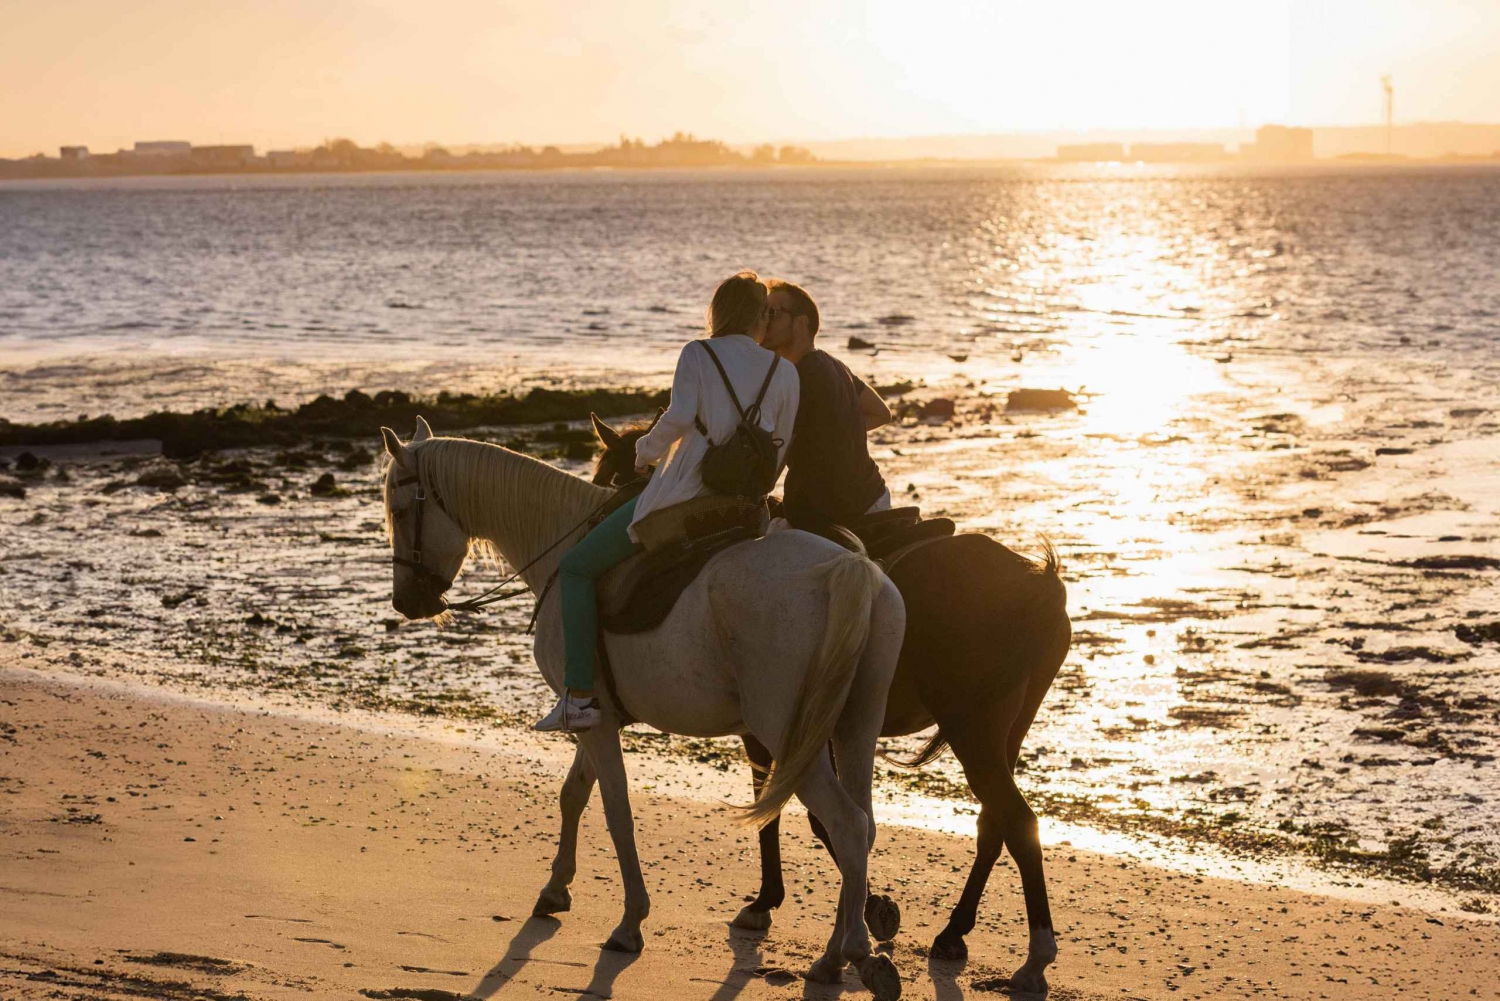 Horseback Riding on the Beach at Sunset